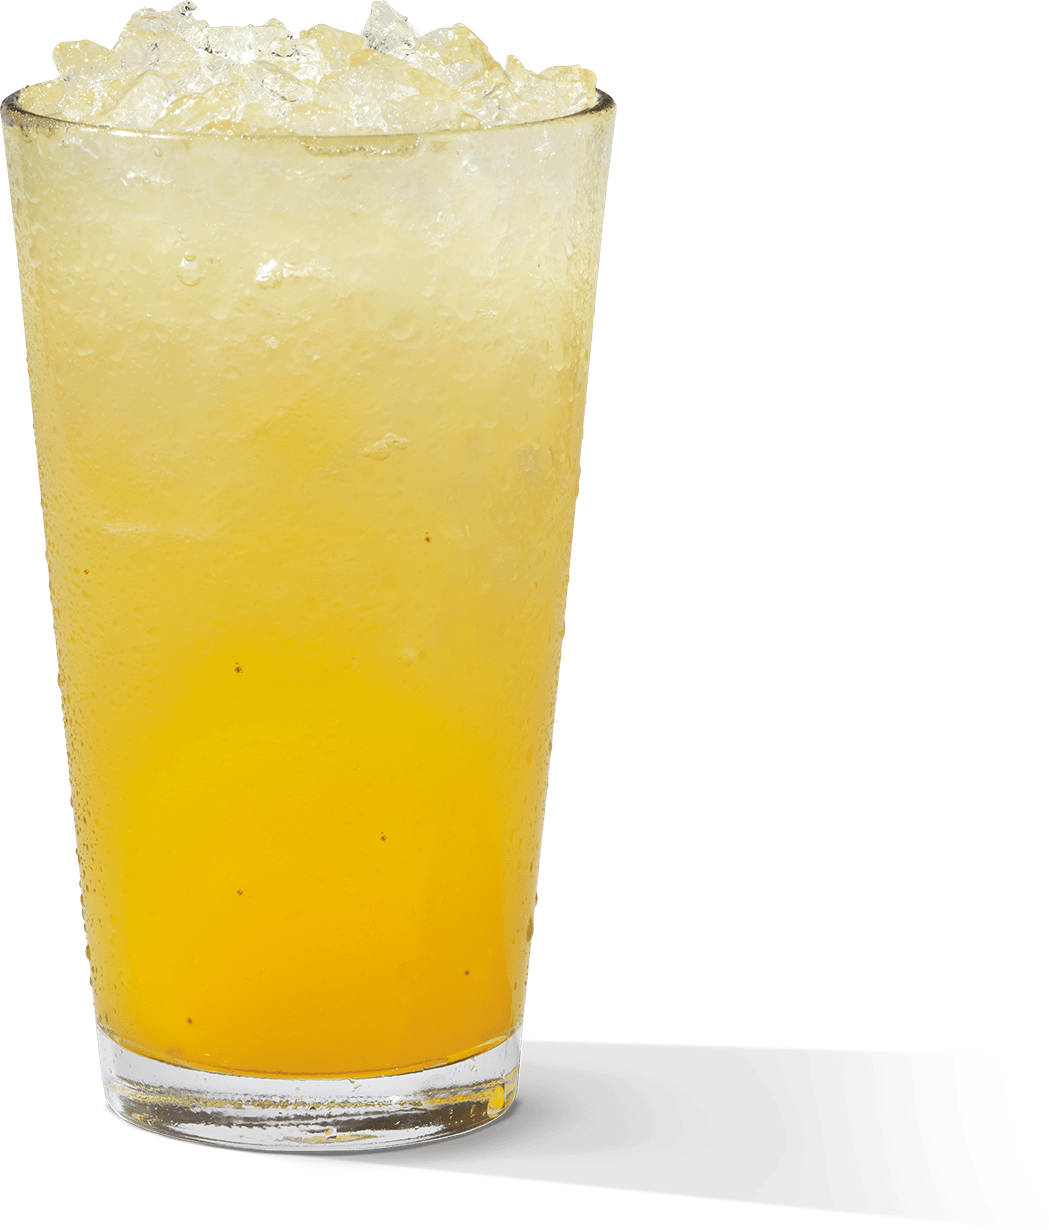 Popeyes Mango Lemonade Nutrition Facts